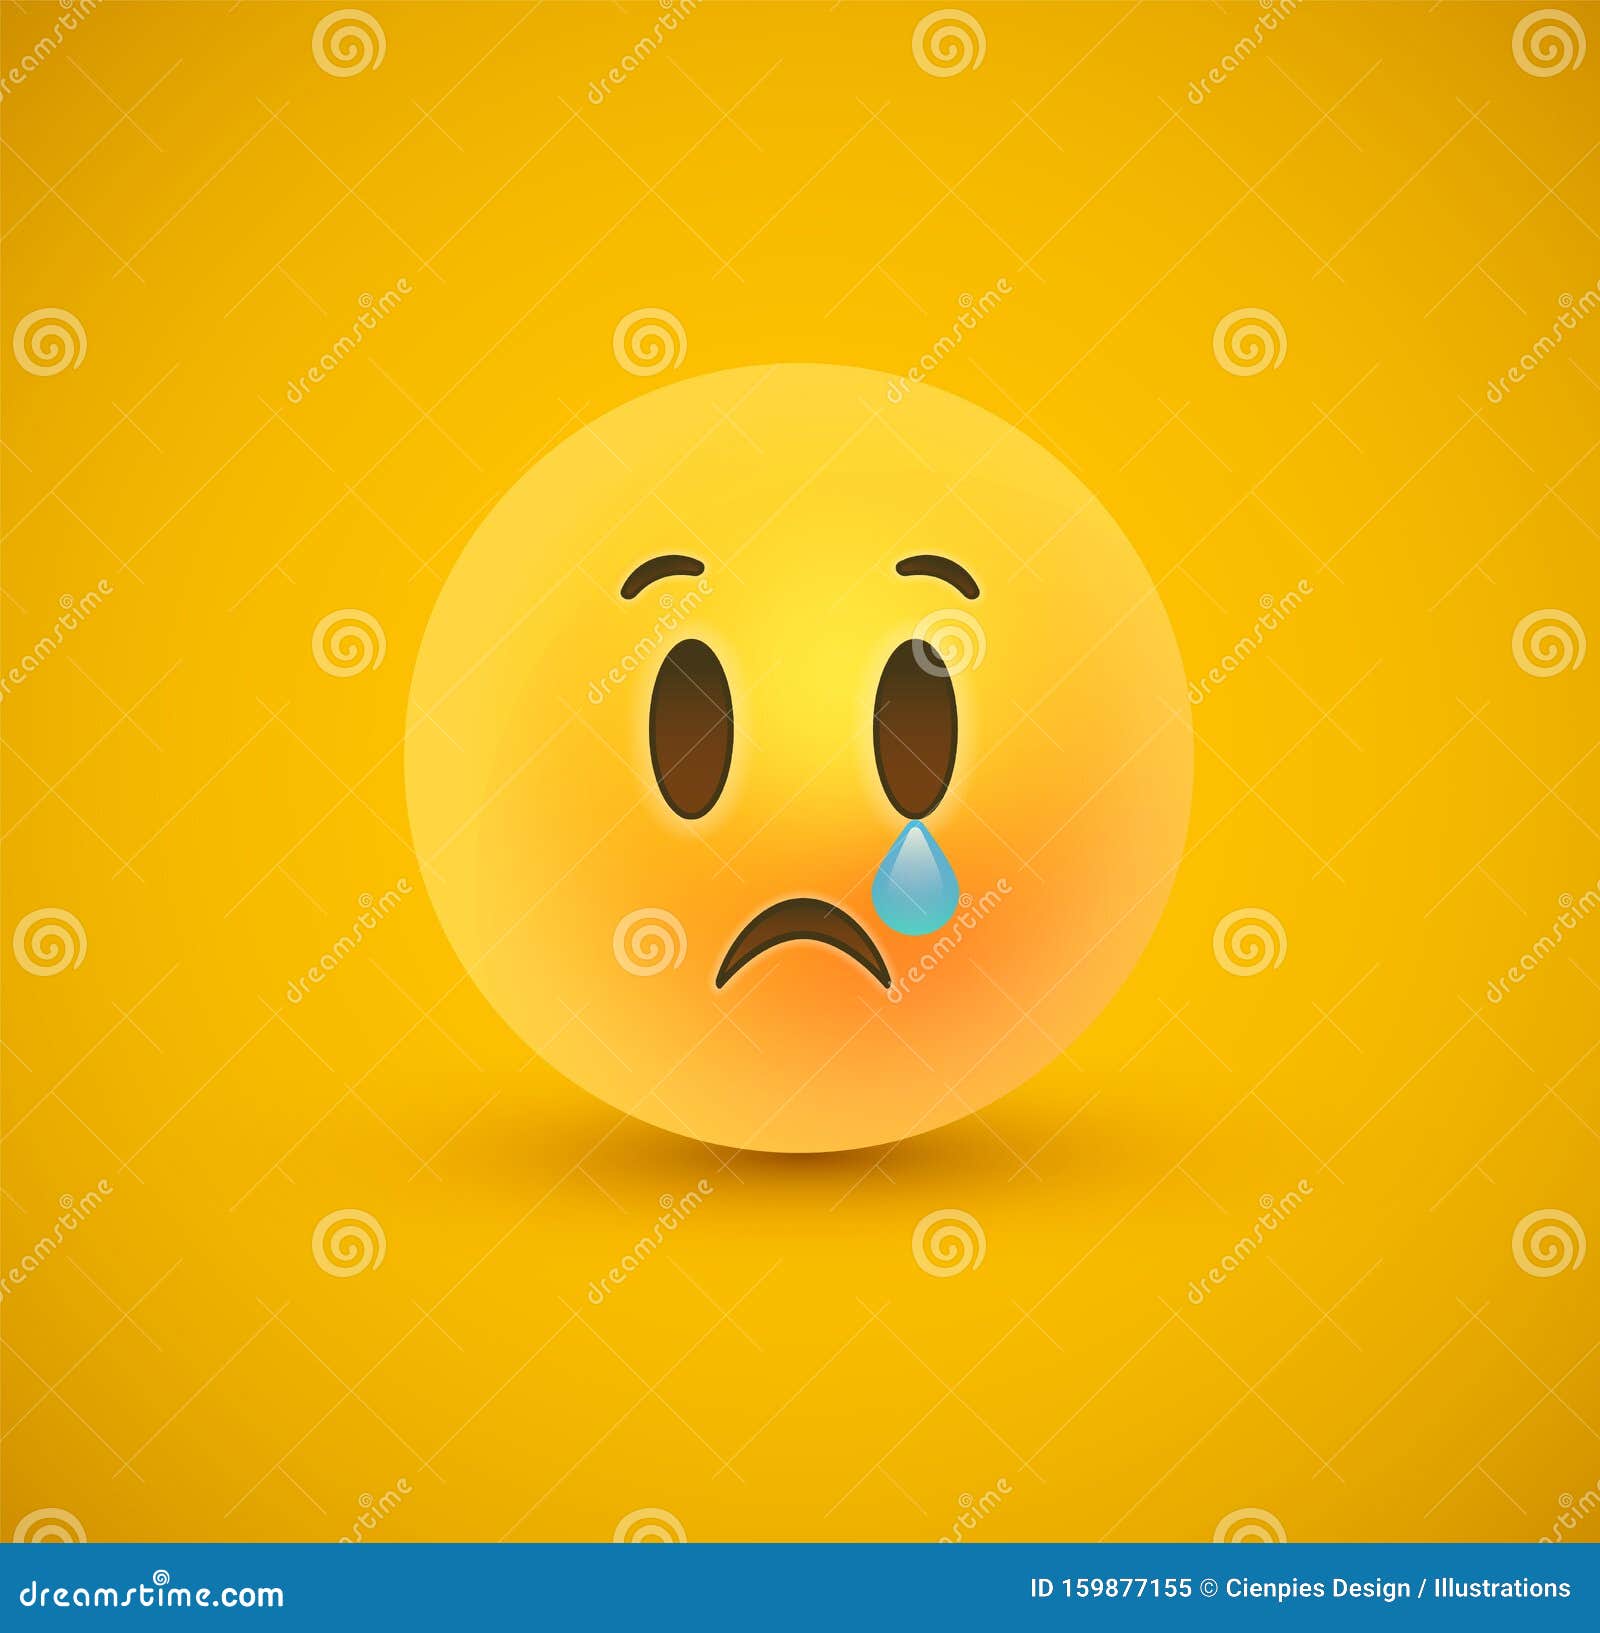 Sad Smiley Stock Photo By C Lenmdp 8587106